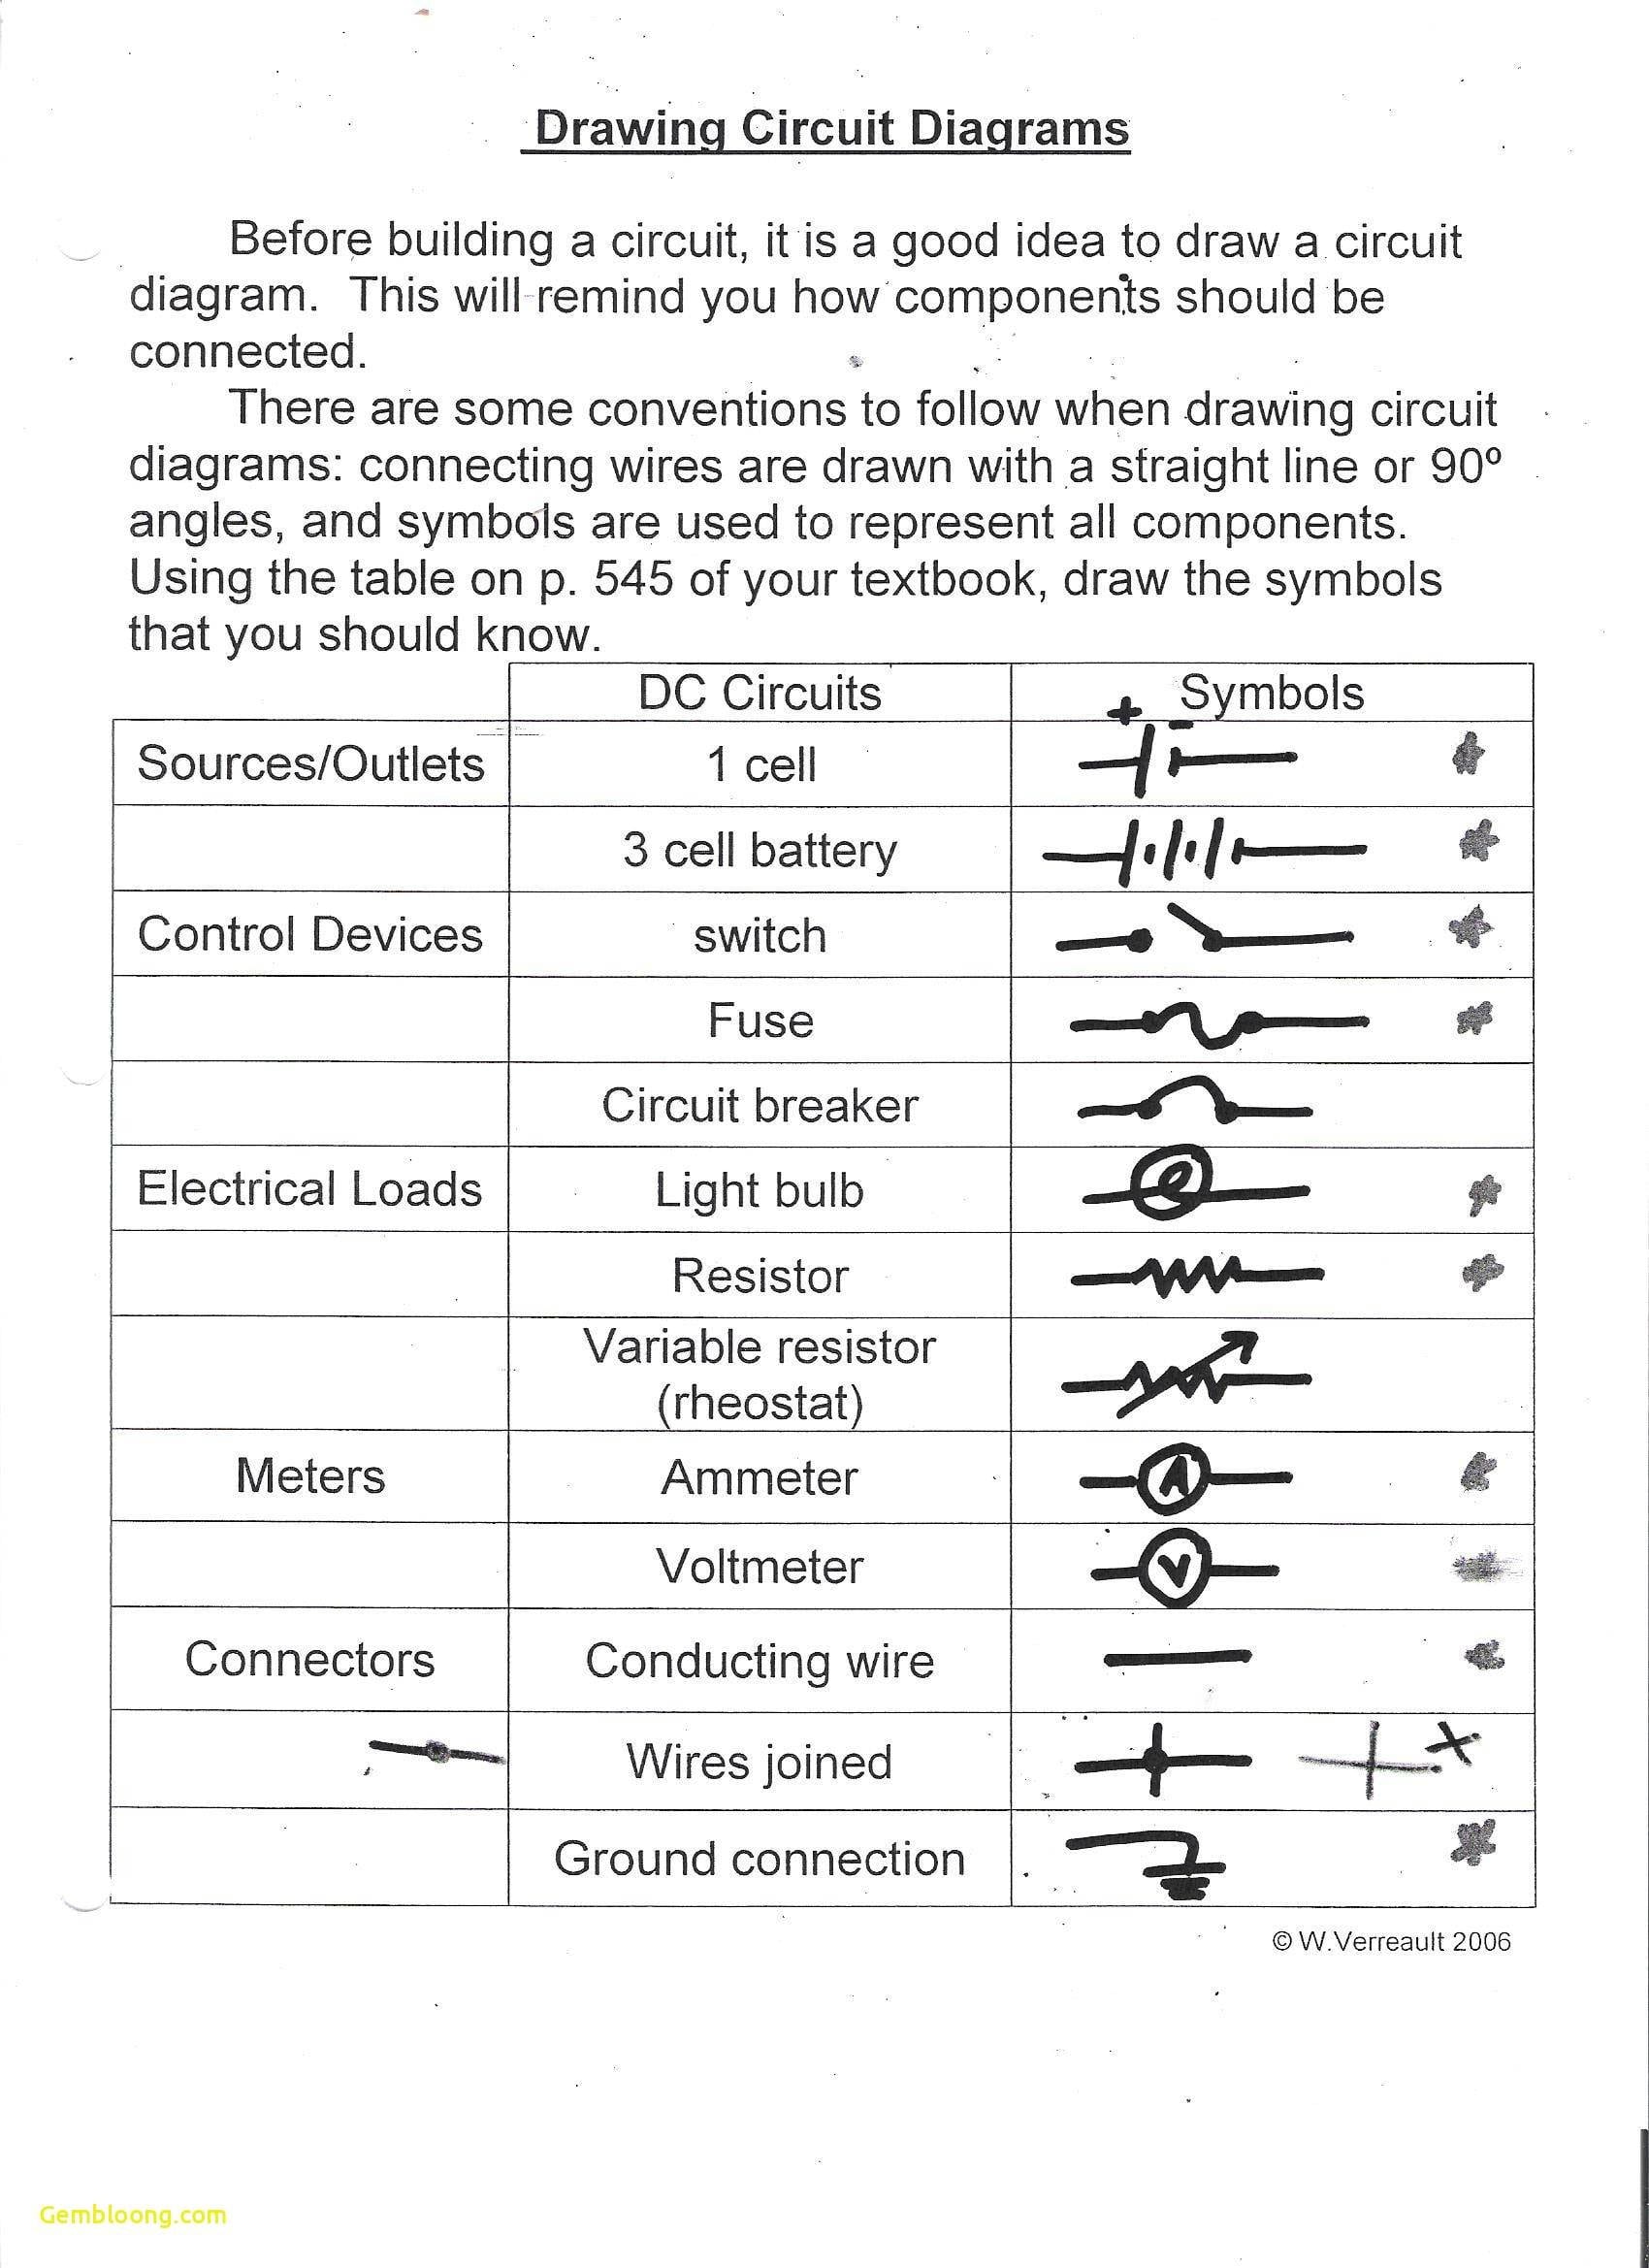 Circuits And Symbols Worksheet Answers  Cramerforcongress As Well As Bill Nye Light Optics Worksheet Answers